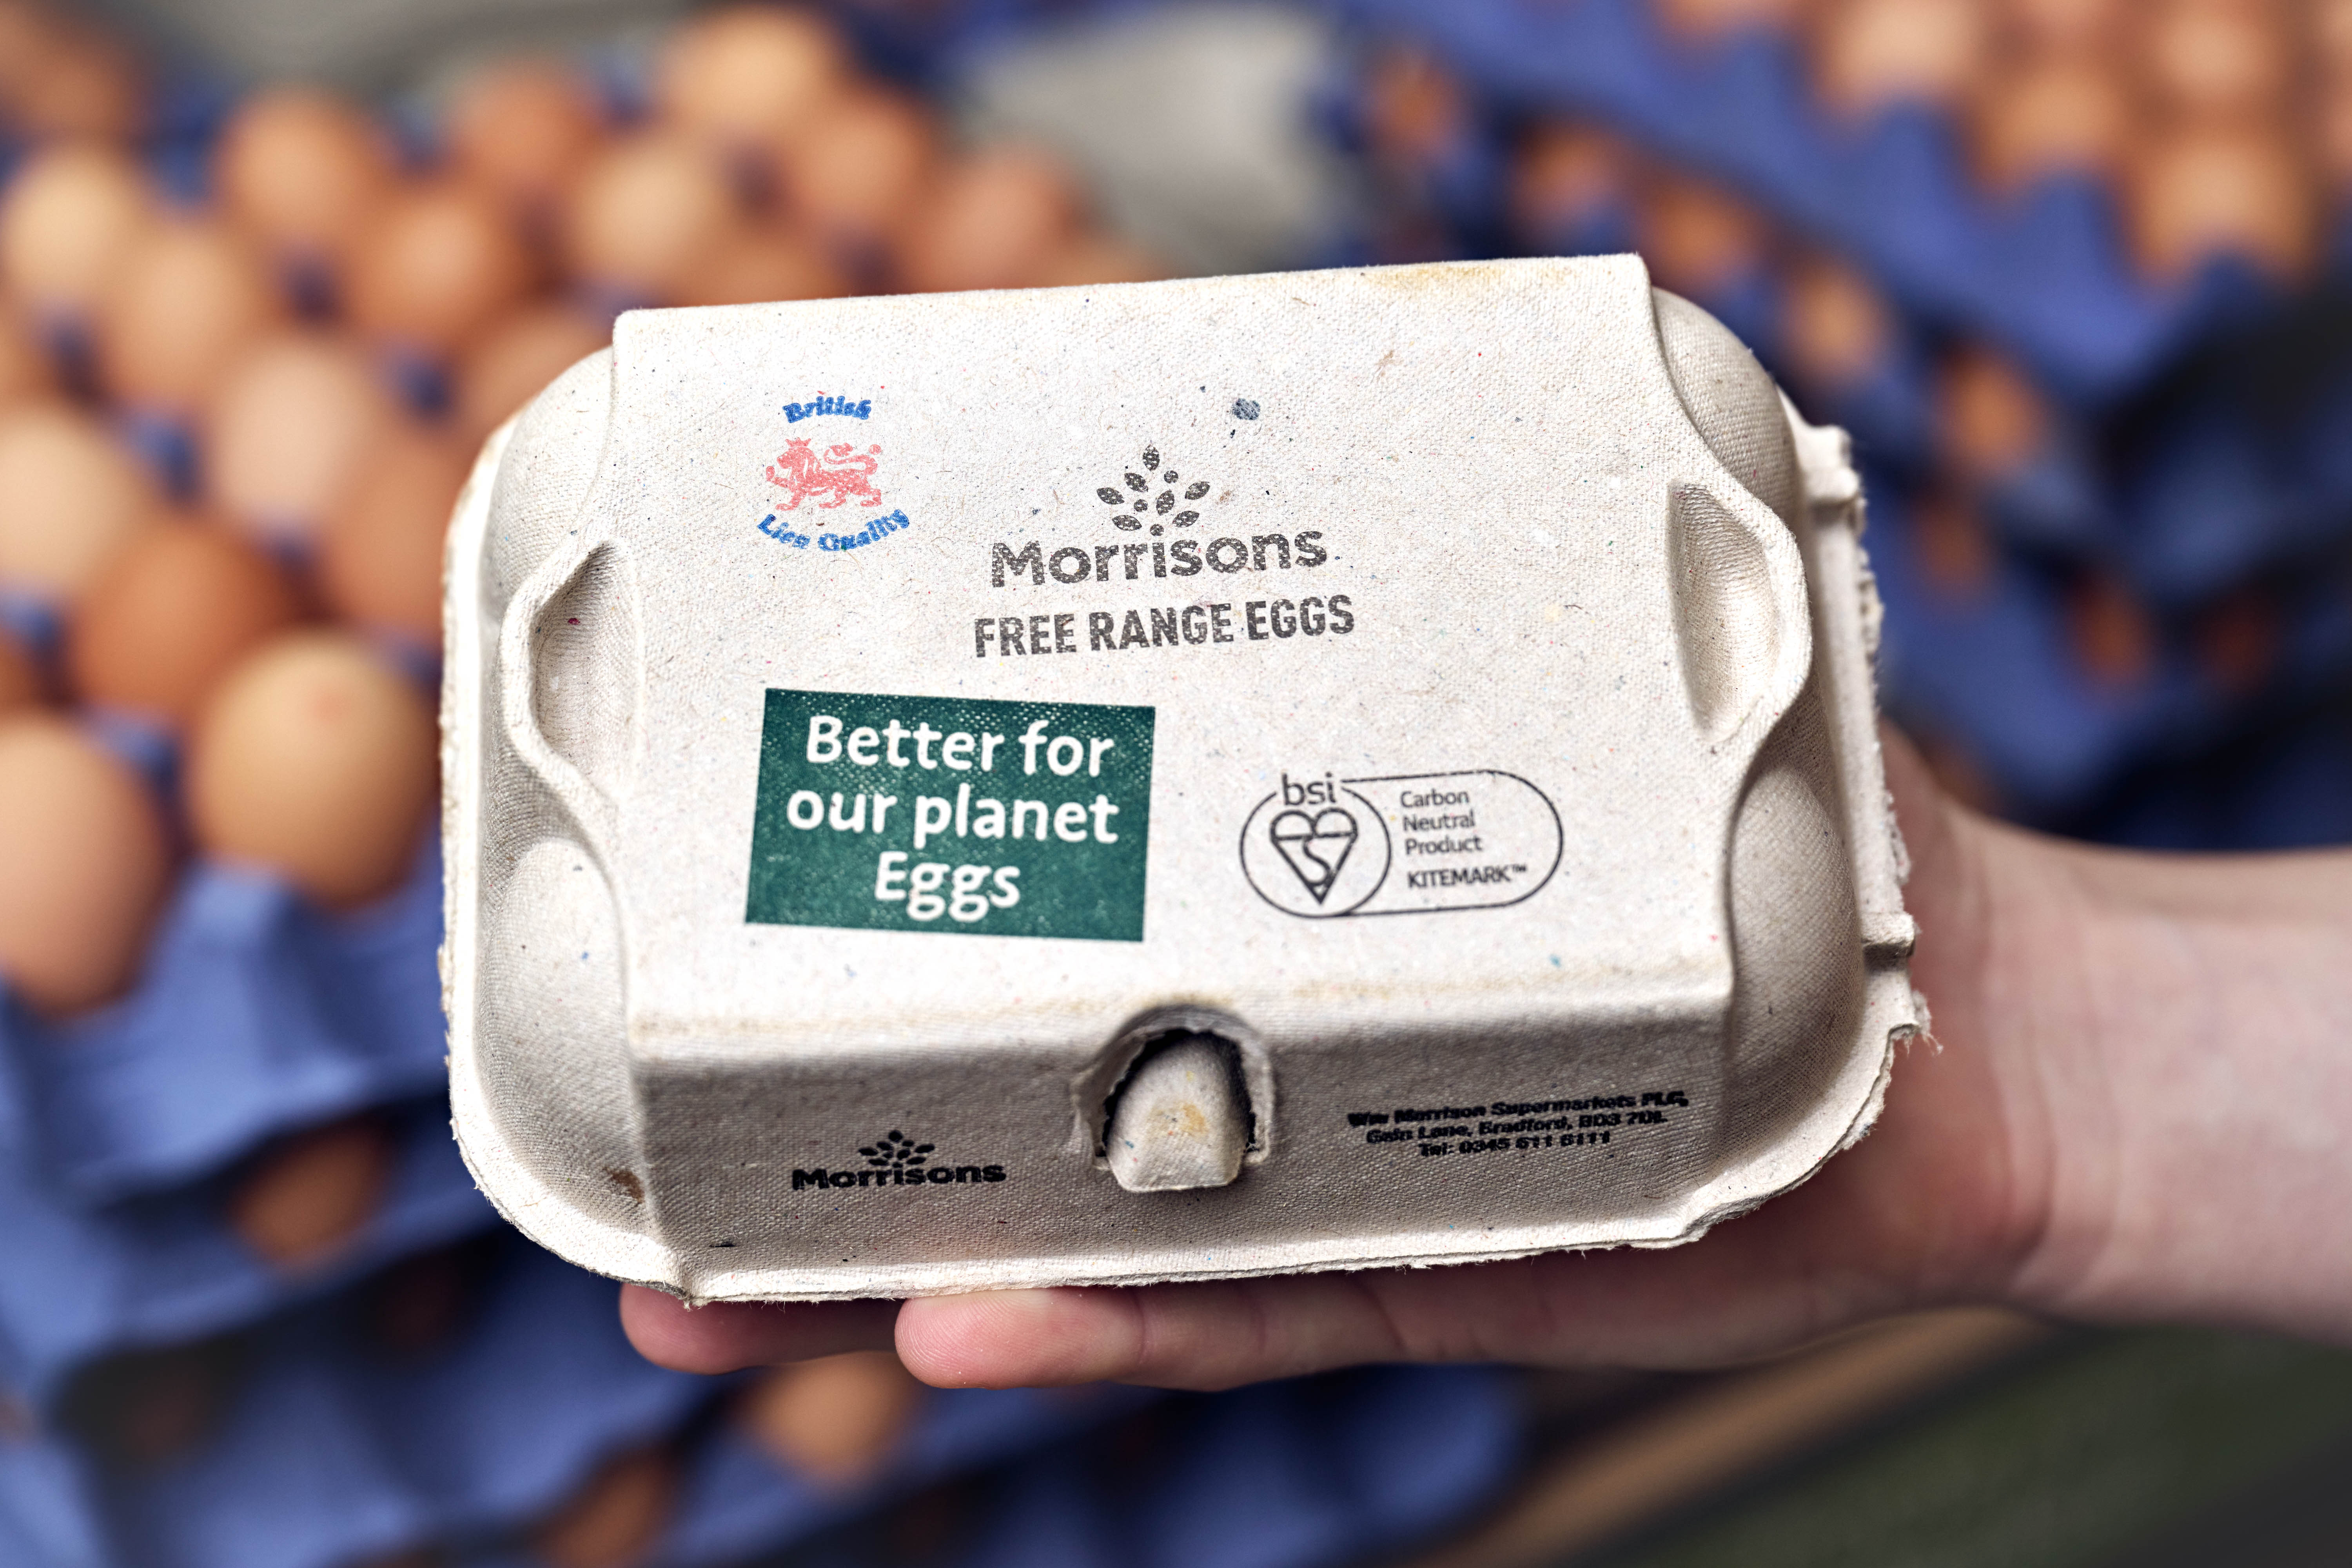 Morrisons eggs achieve the first UK carbon neutral BSI Kitemark™ certification